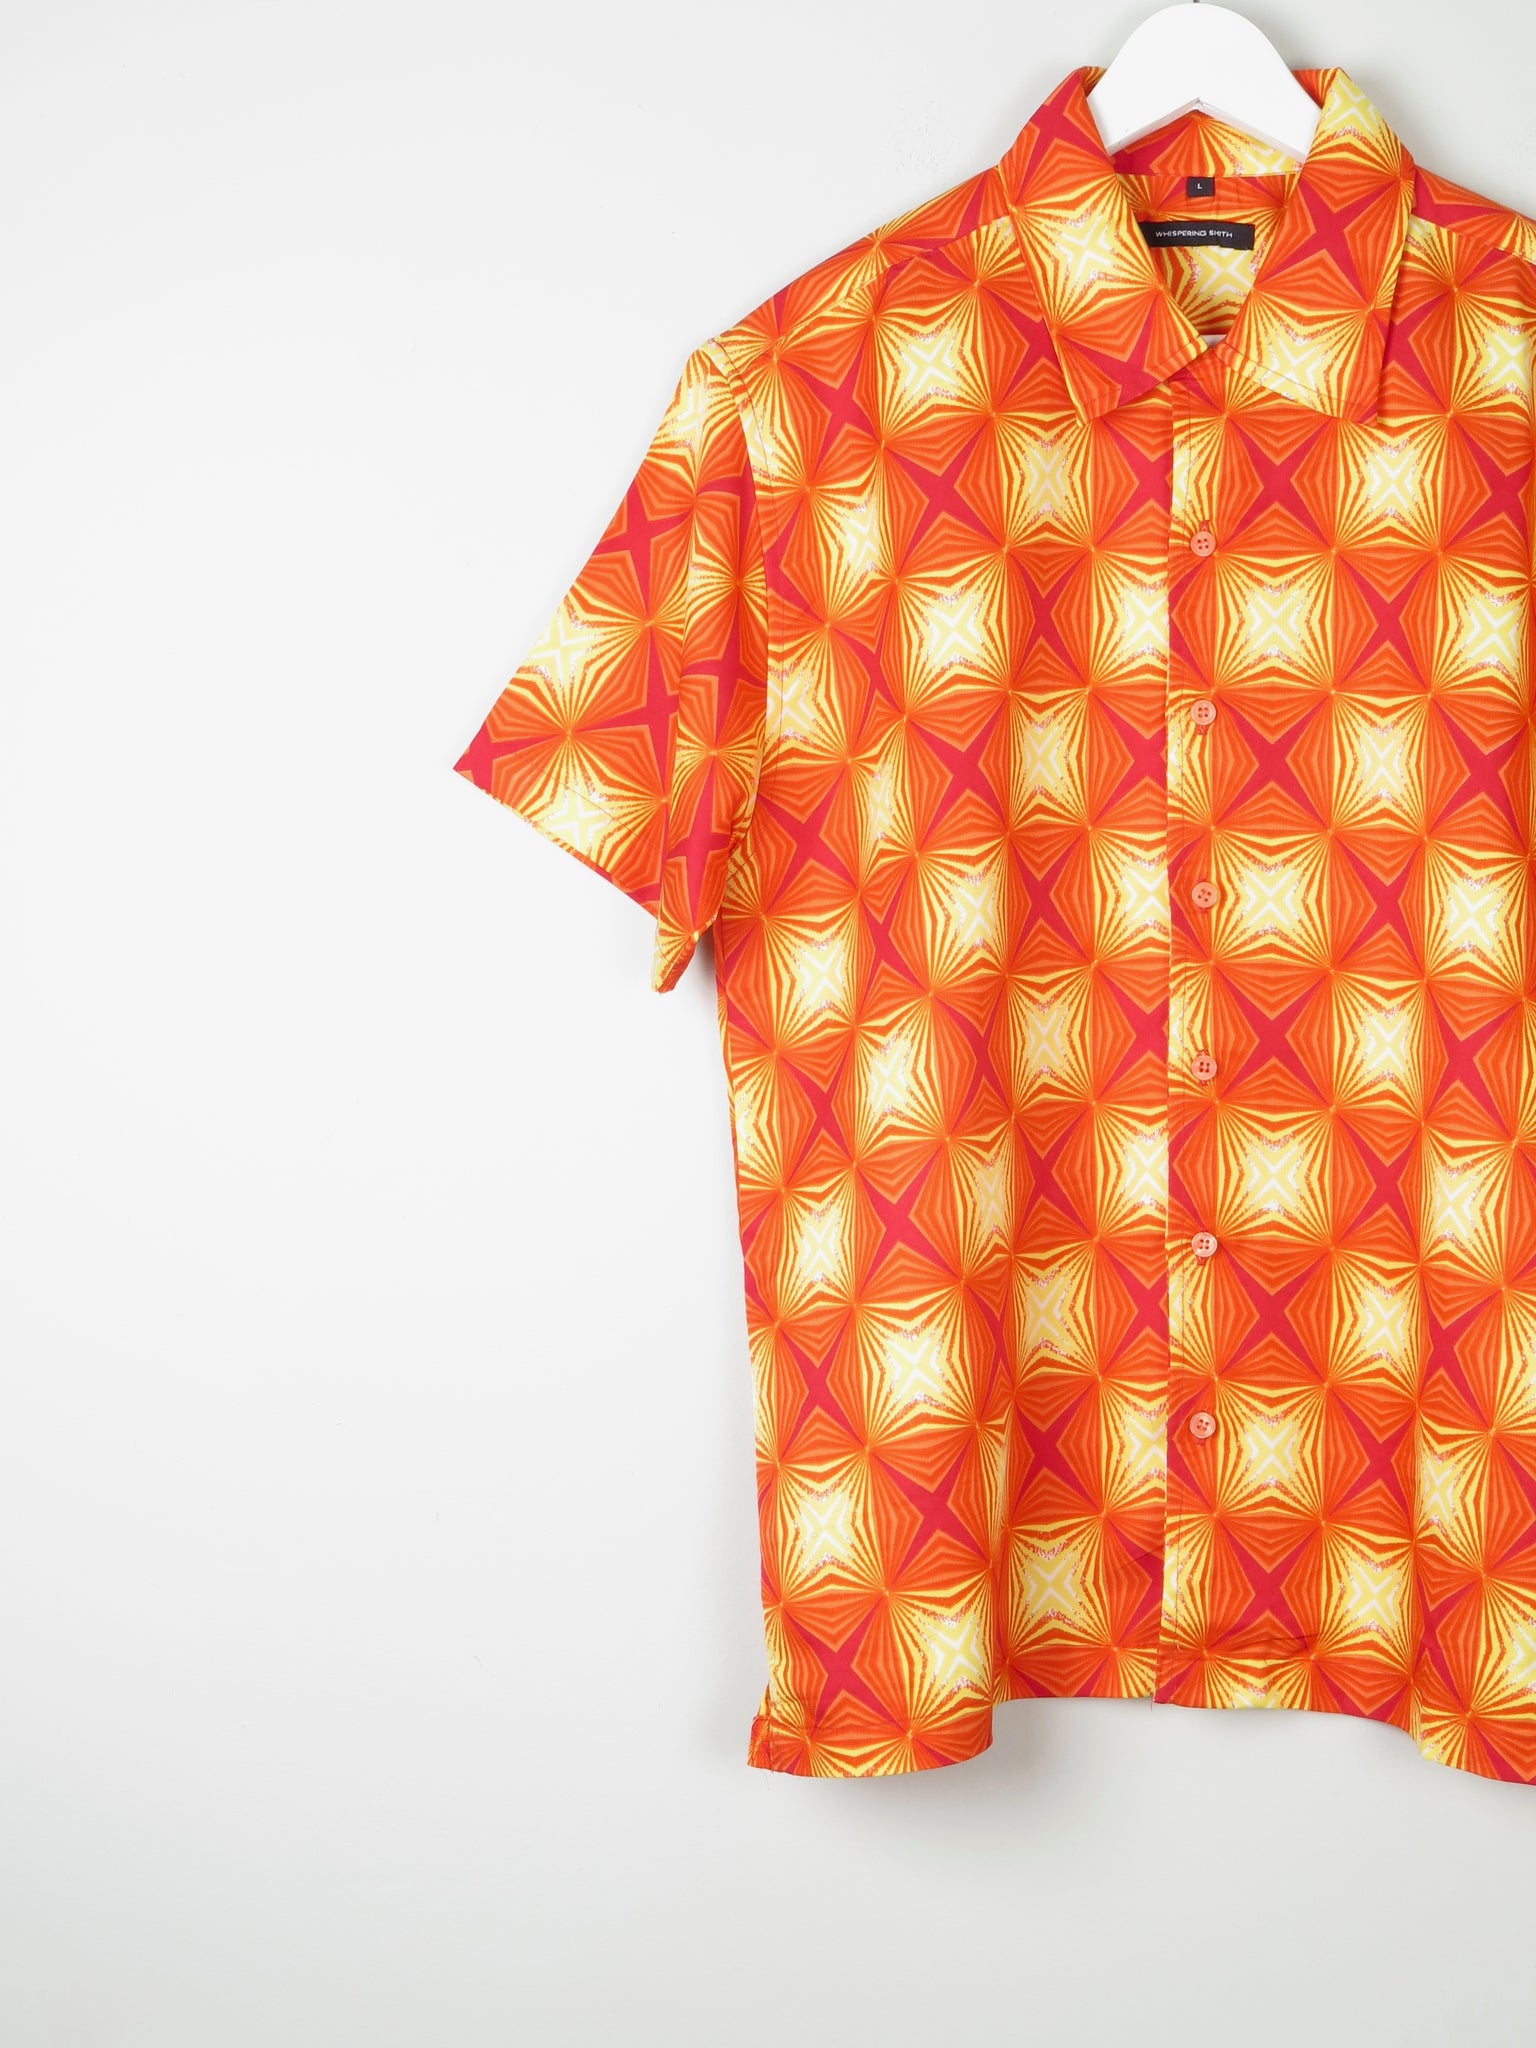 Men's Orange Printed Hawaiian Shirt L